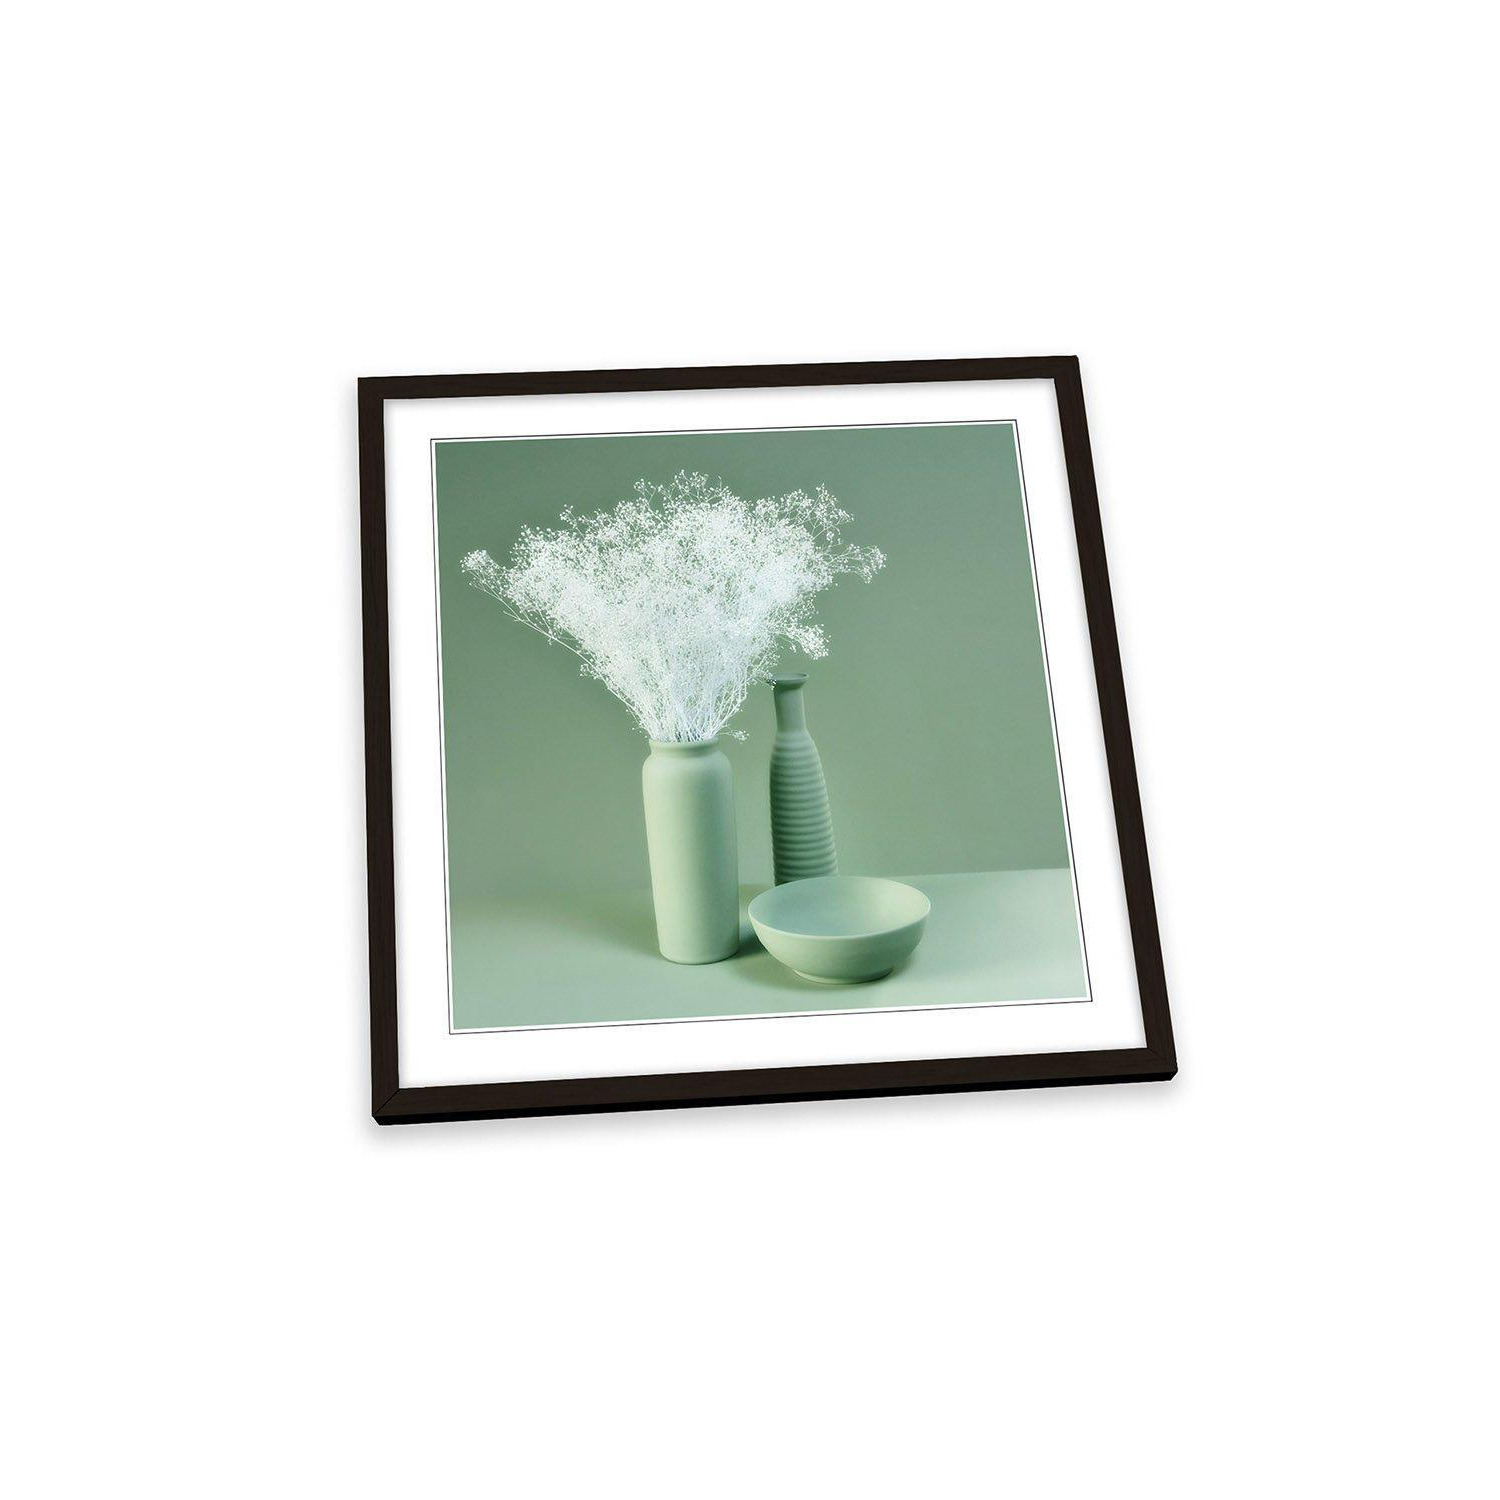 Green Still Life Floral Vase Bowl Framed Art Print Picture Square Wall Artwork - (H)35cm x (W)35cm - image 1